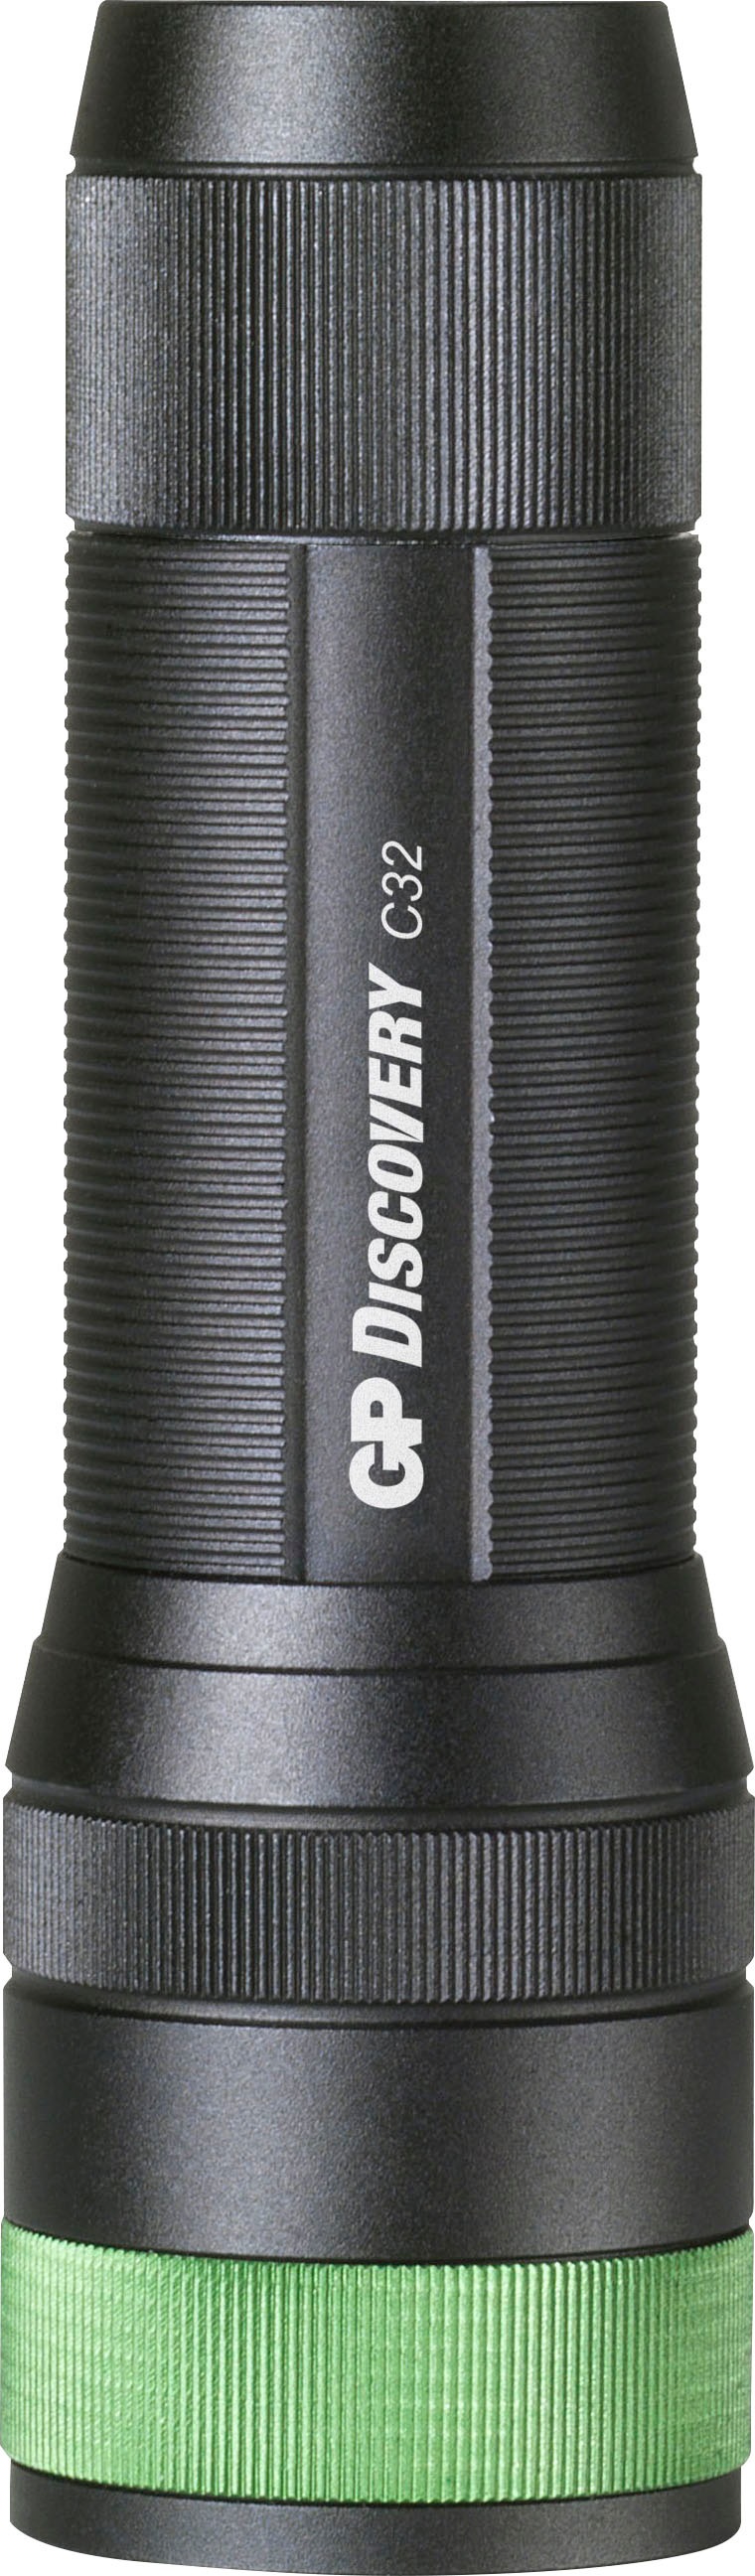 GP Batteries Taschenlampe »Discovery C32«, inkl. 3x AAA Batterie, Metallgehäuse, Leuchtmodi Max/Niedrig/SOS